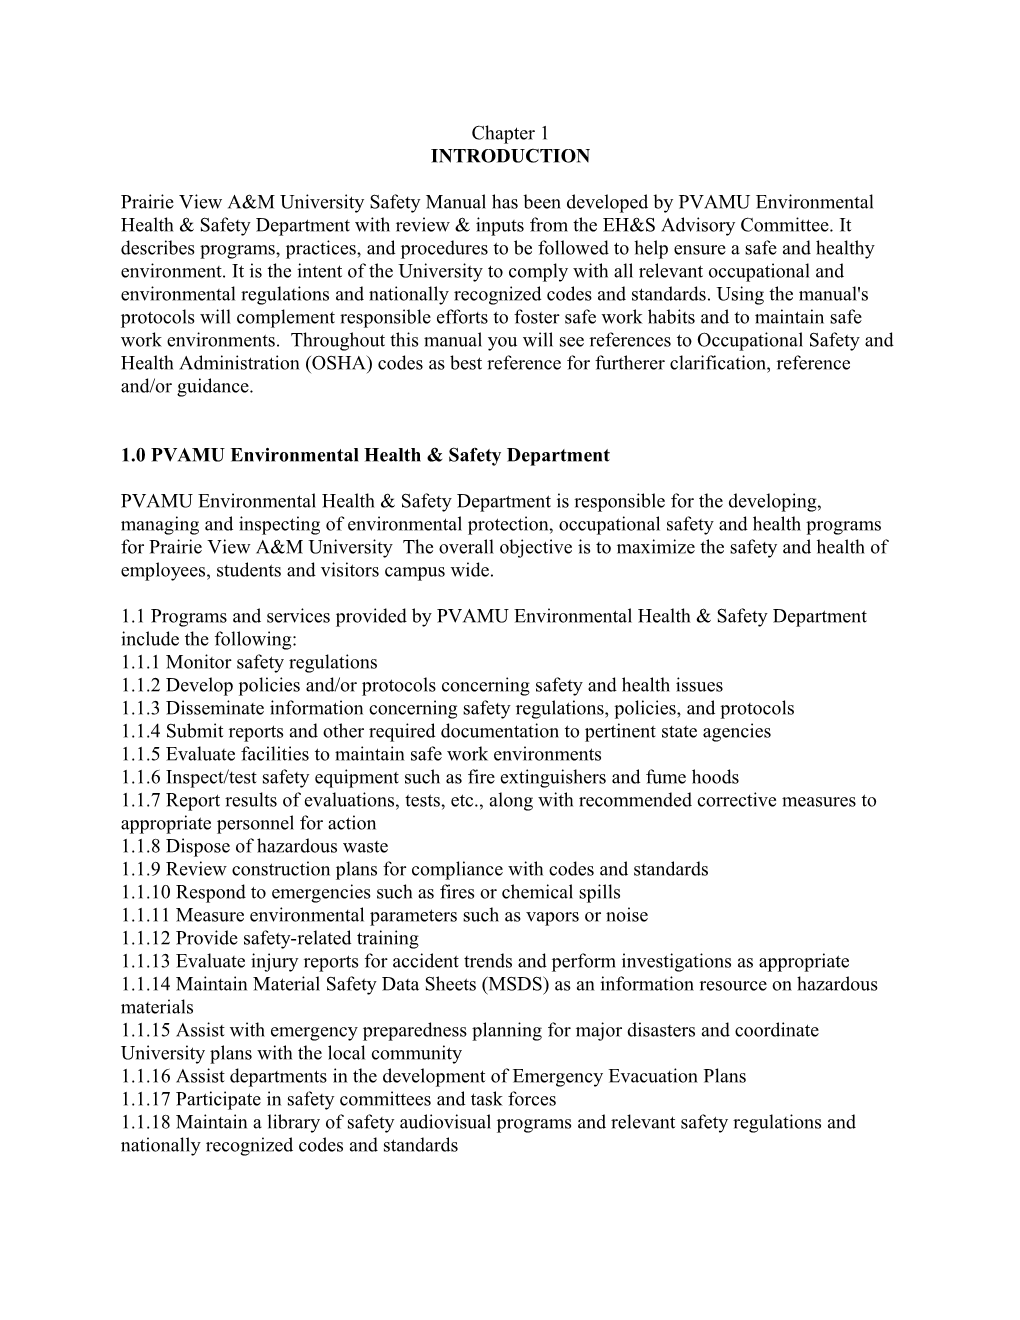 1.0 PVAMU Environmental Health & Safety Department